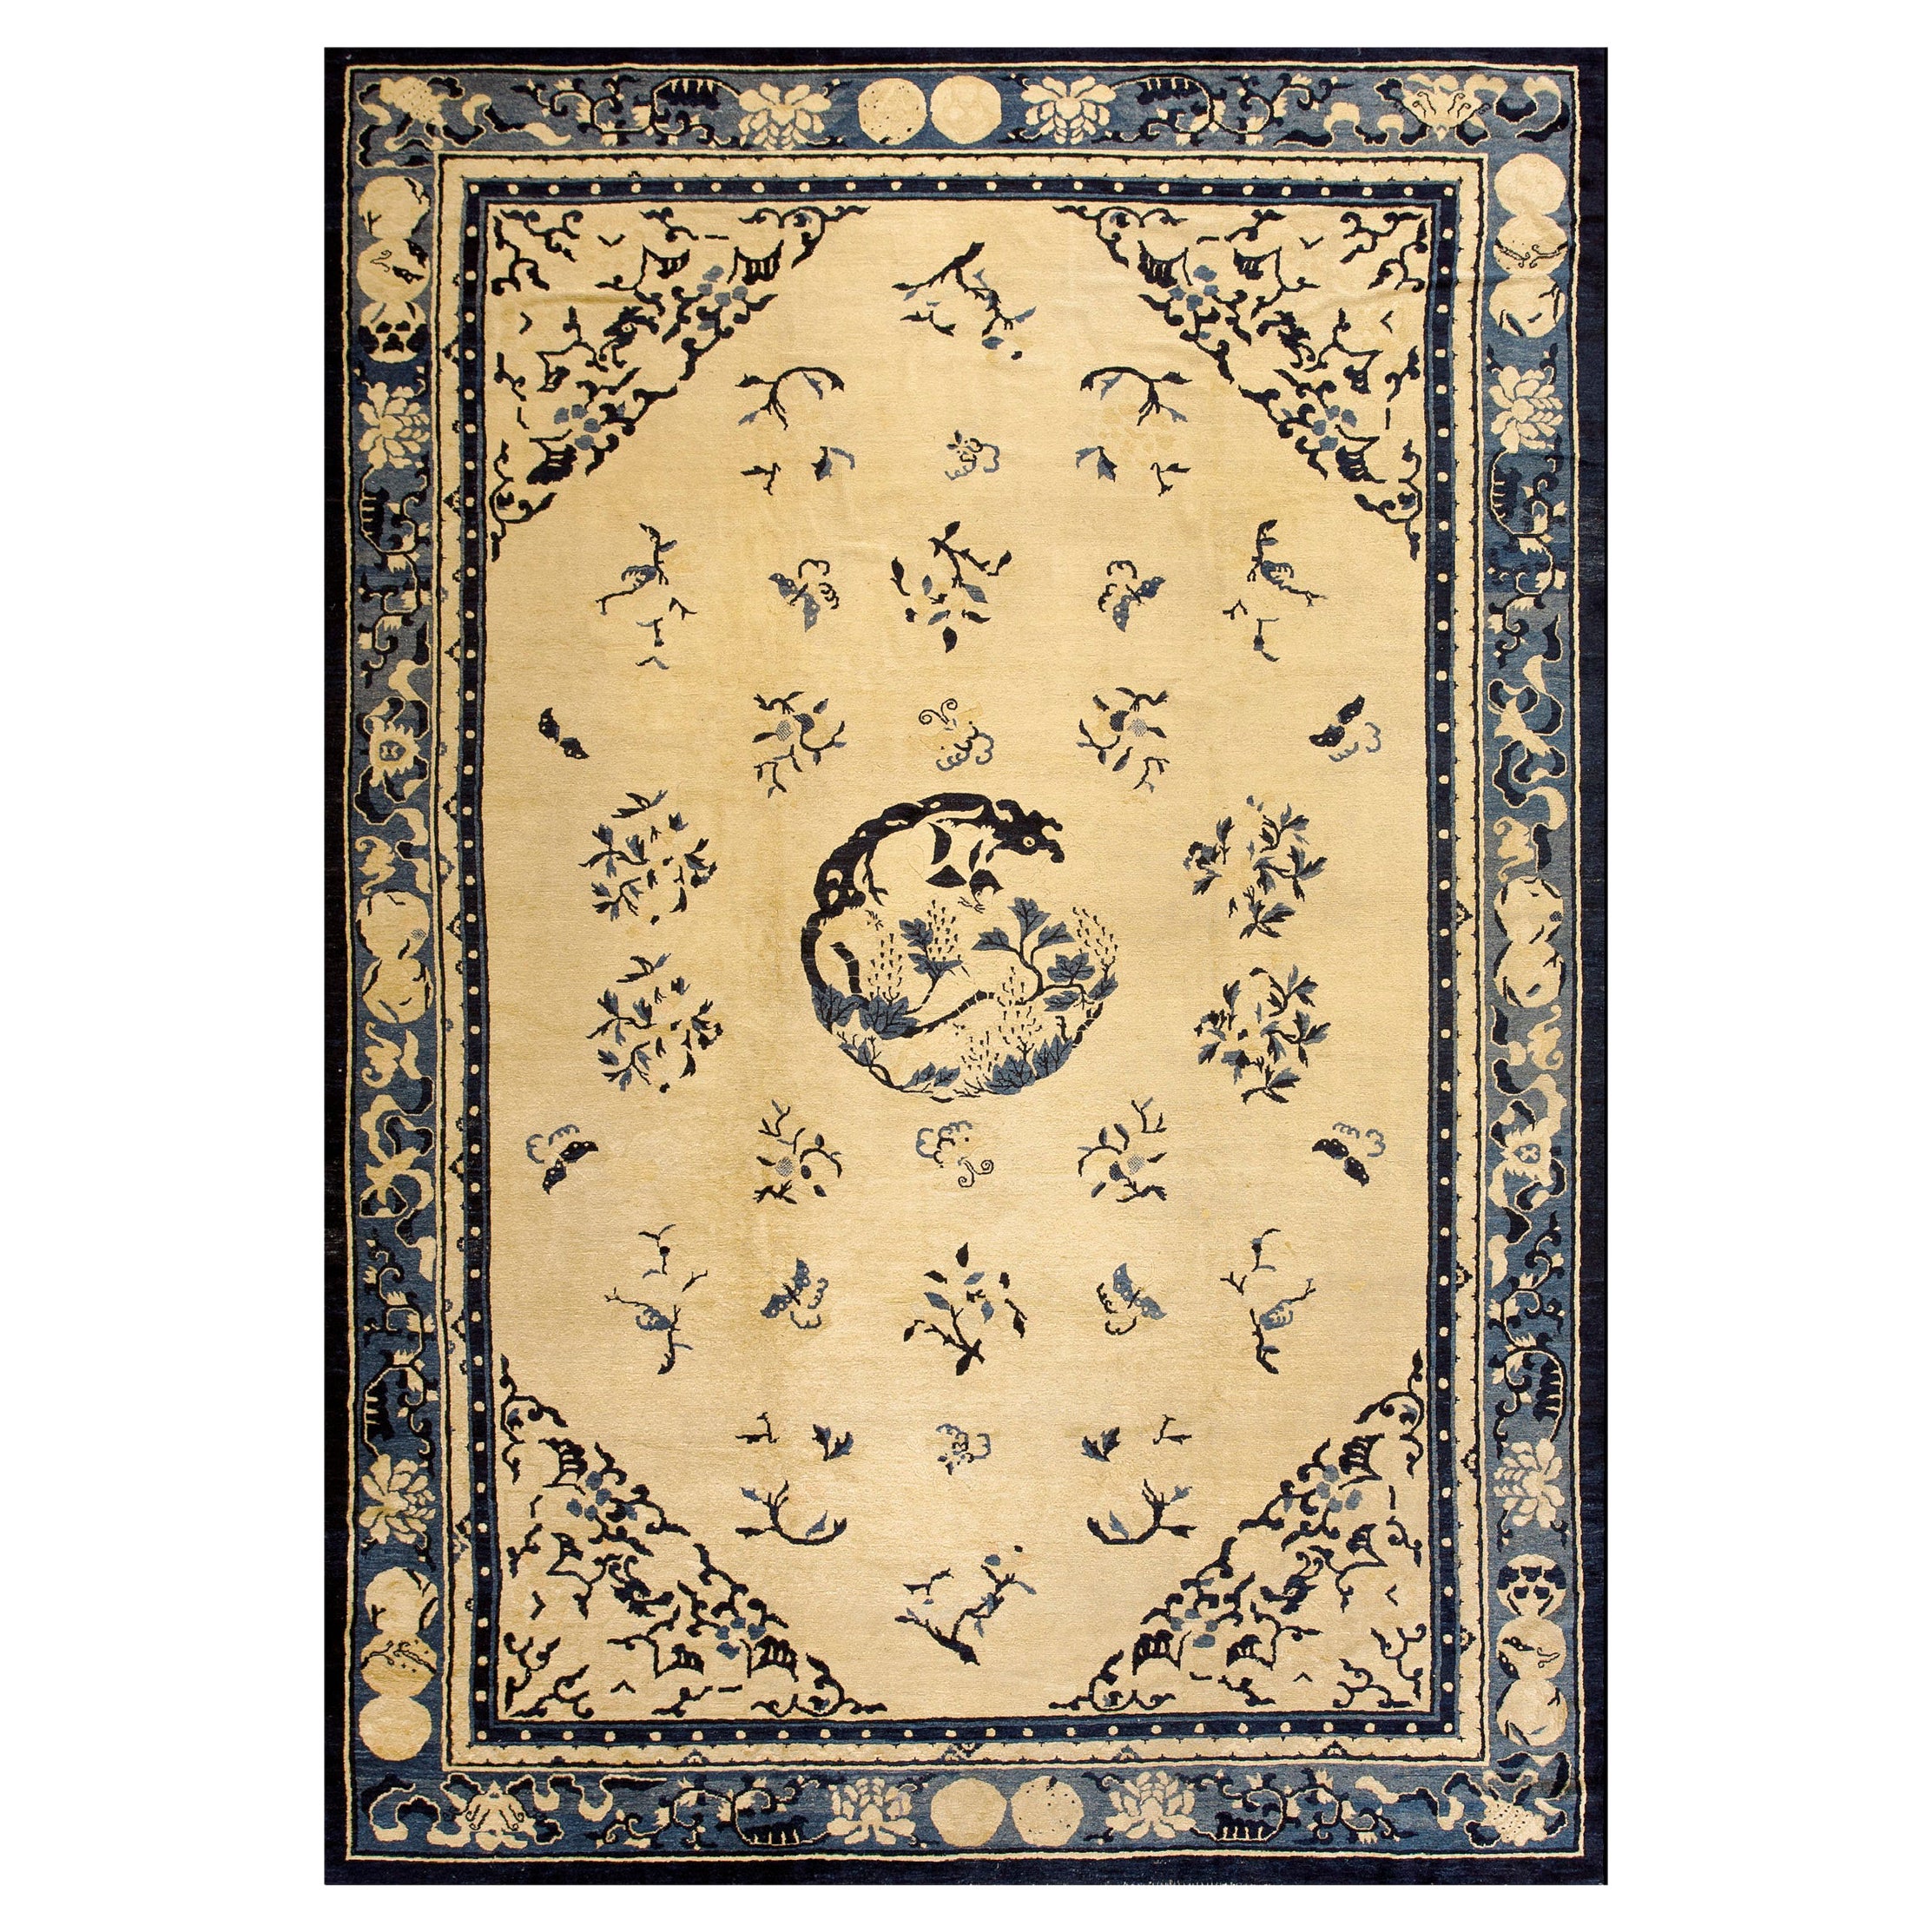 19th Century Chinese Peking Carpet ( 8'10" x 12'9" - 270 x 390 )